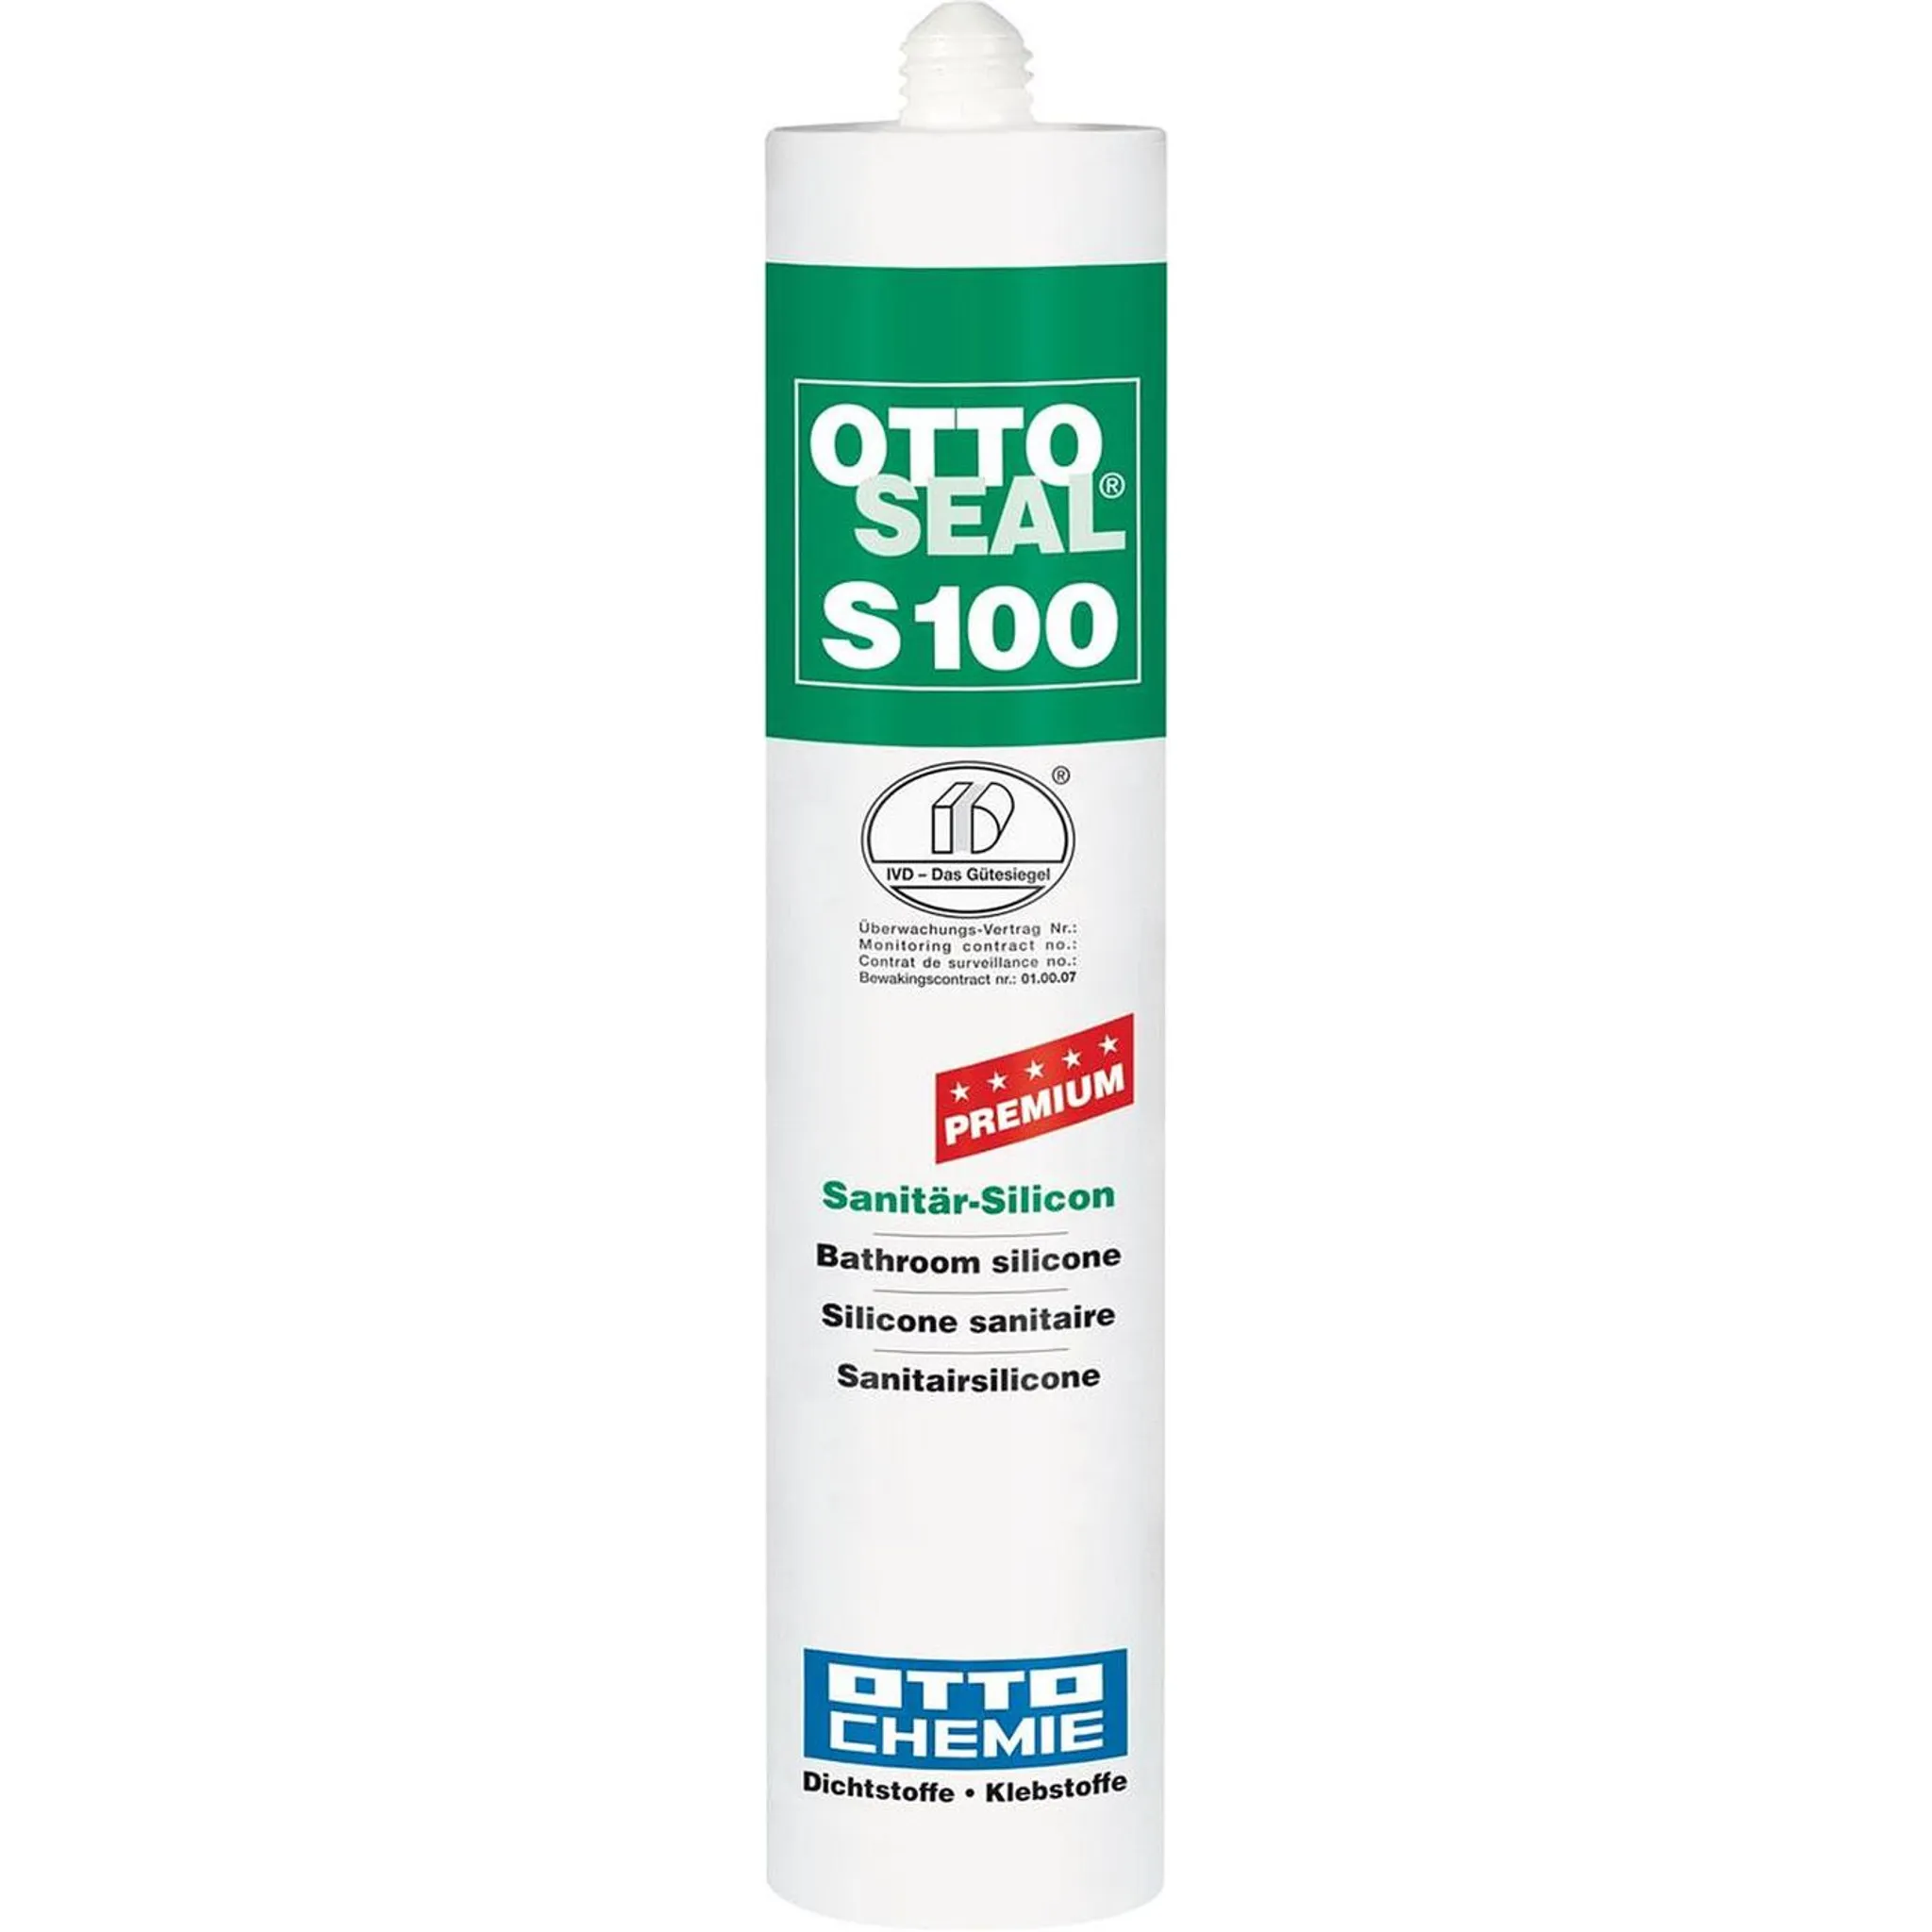 Ottoseal Premium Sanitär Silicon S 100 Farbe C 01 weiß 300ml